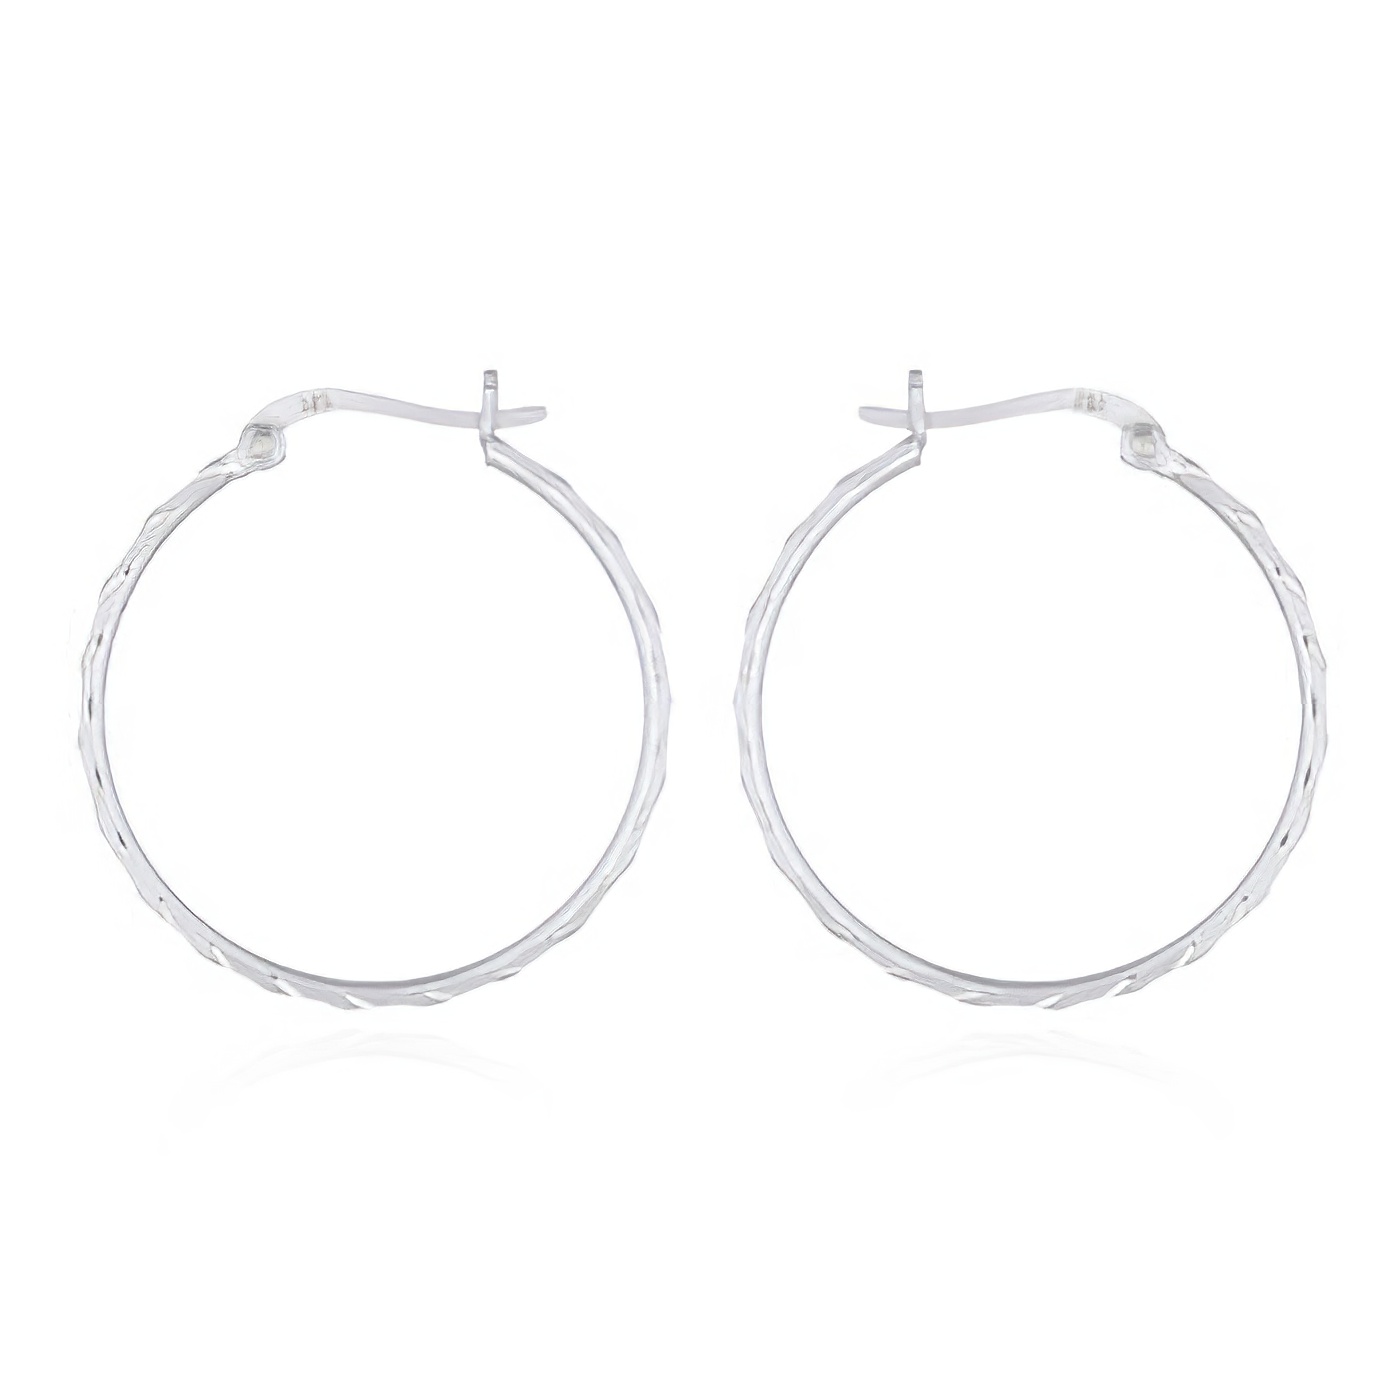 30 mm Faceted Silver Wire Hoop Earrings by BeYindi 